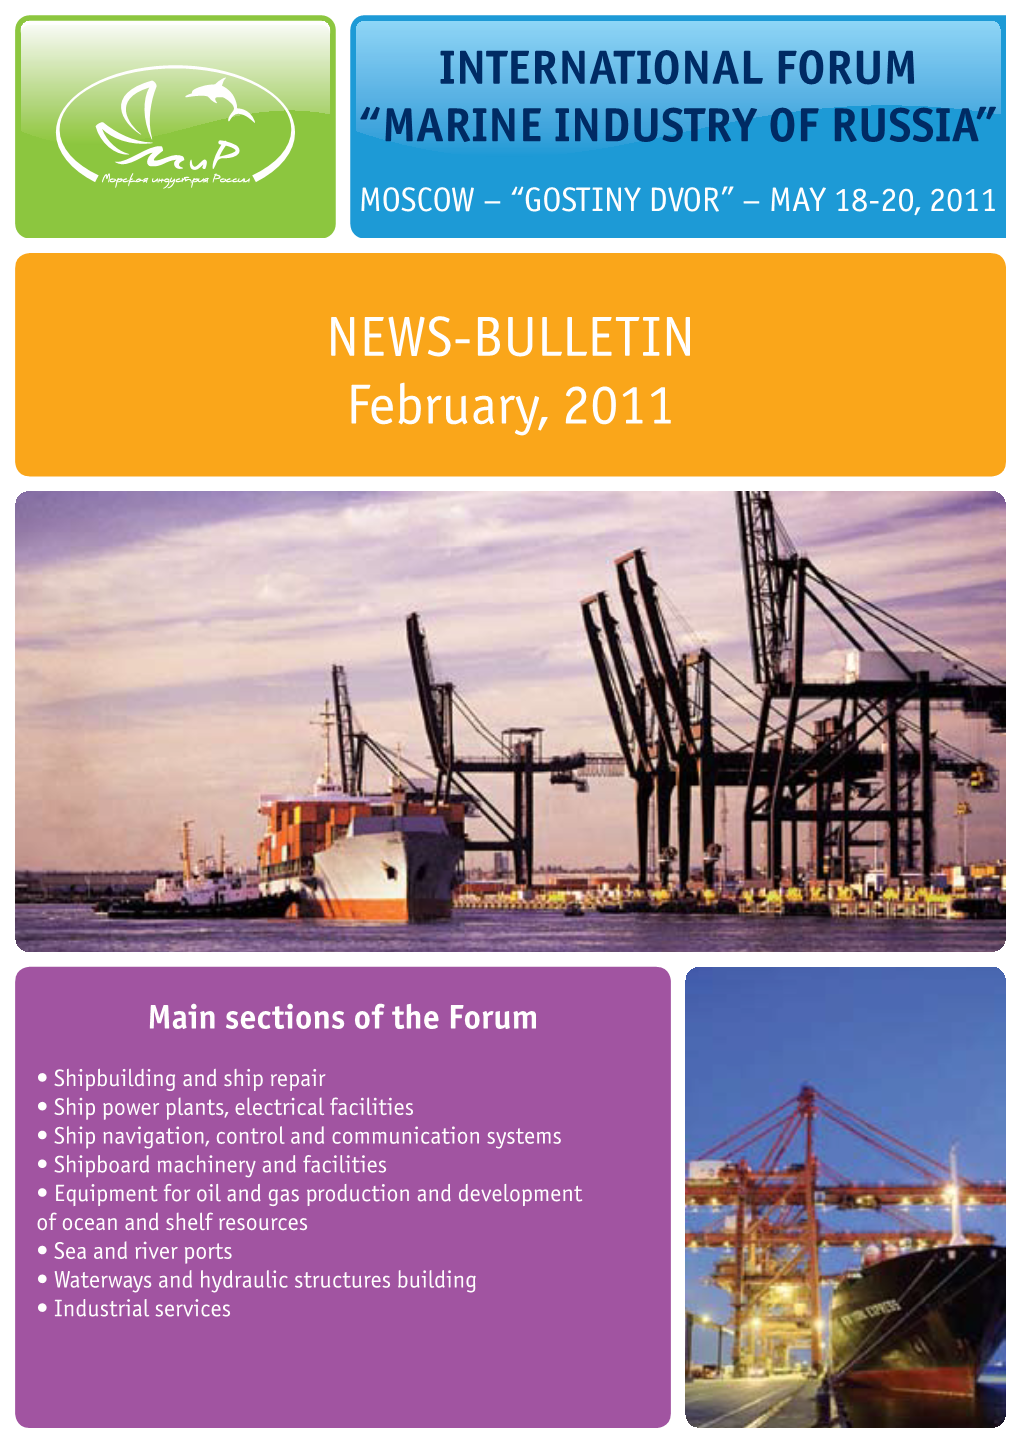 NEWS-BULLETIN February, 2011